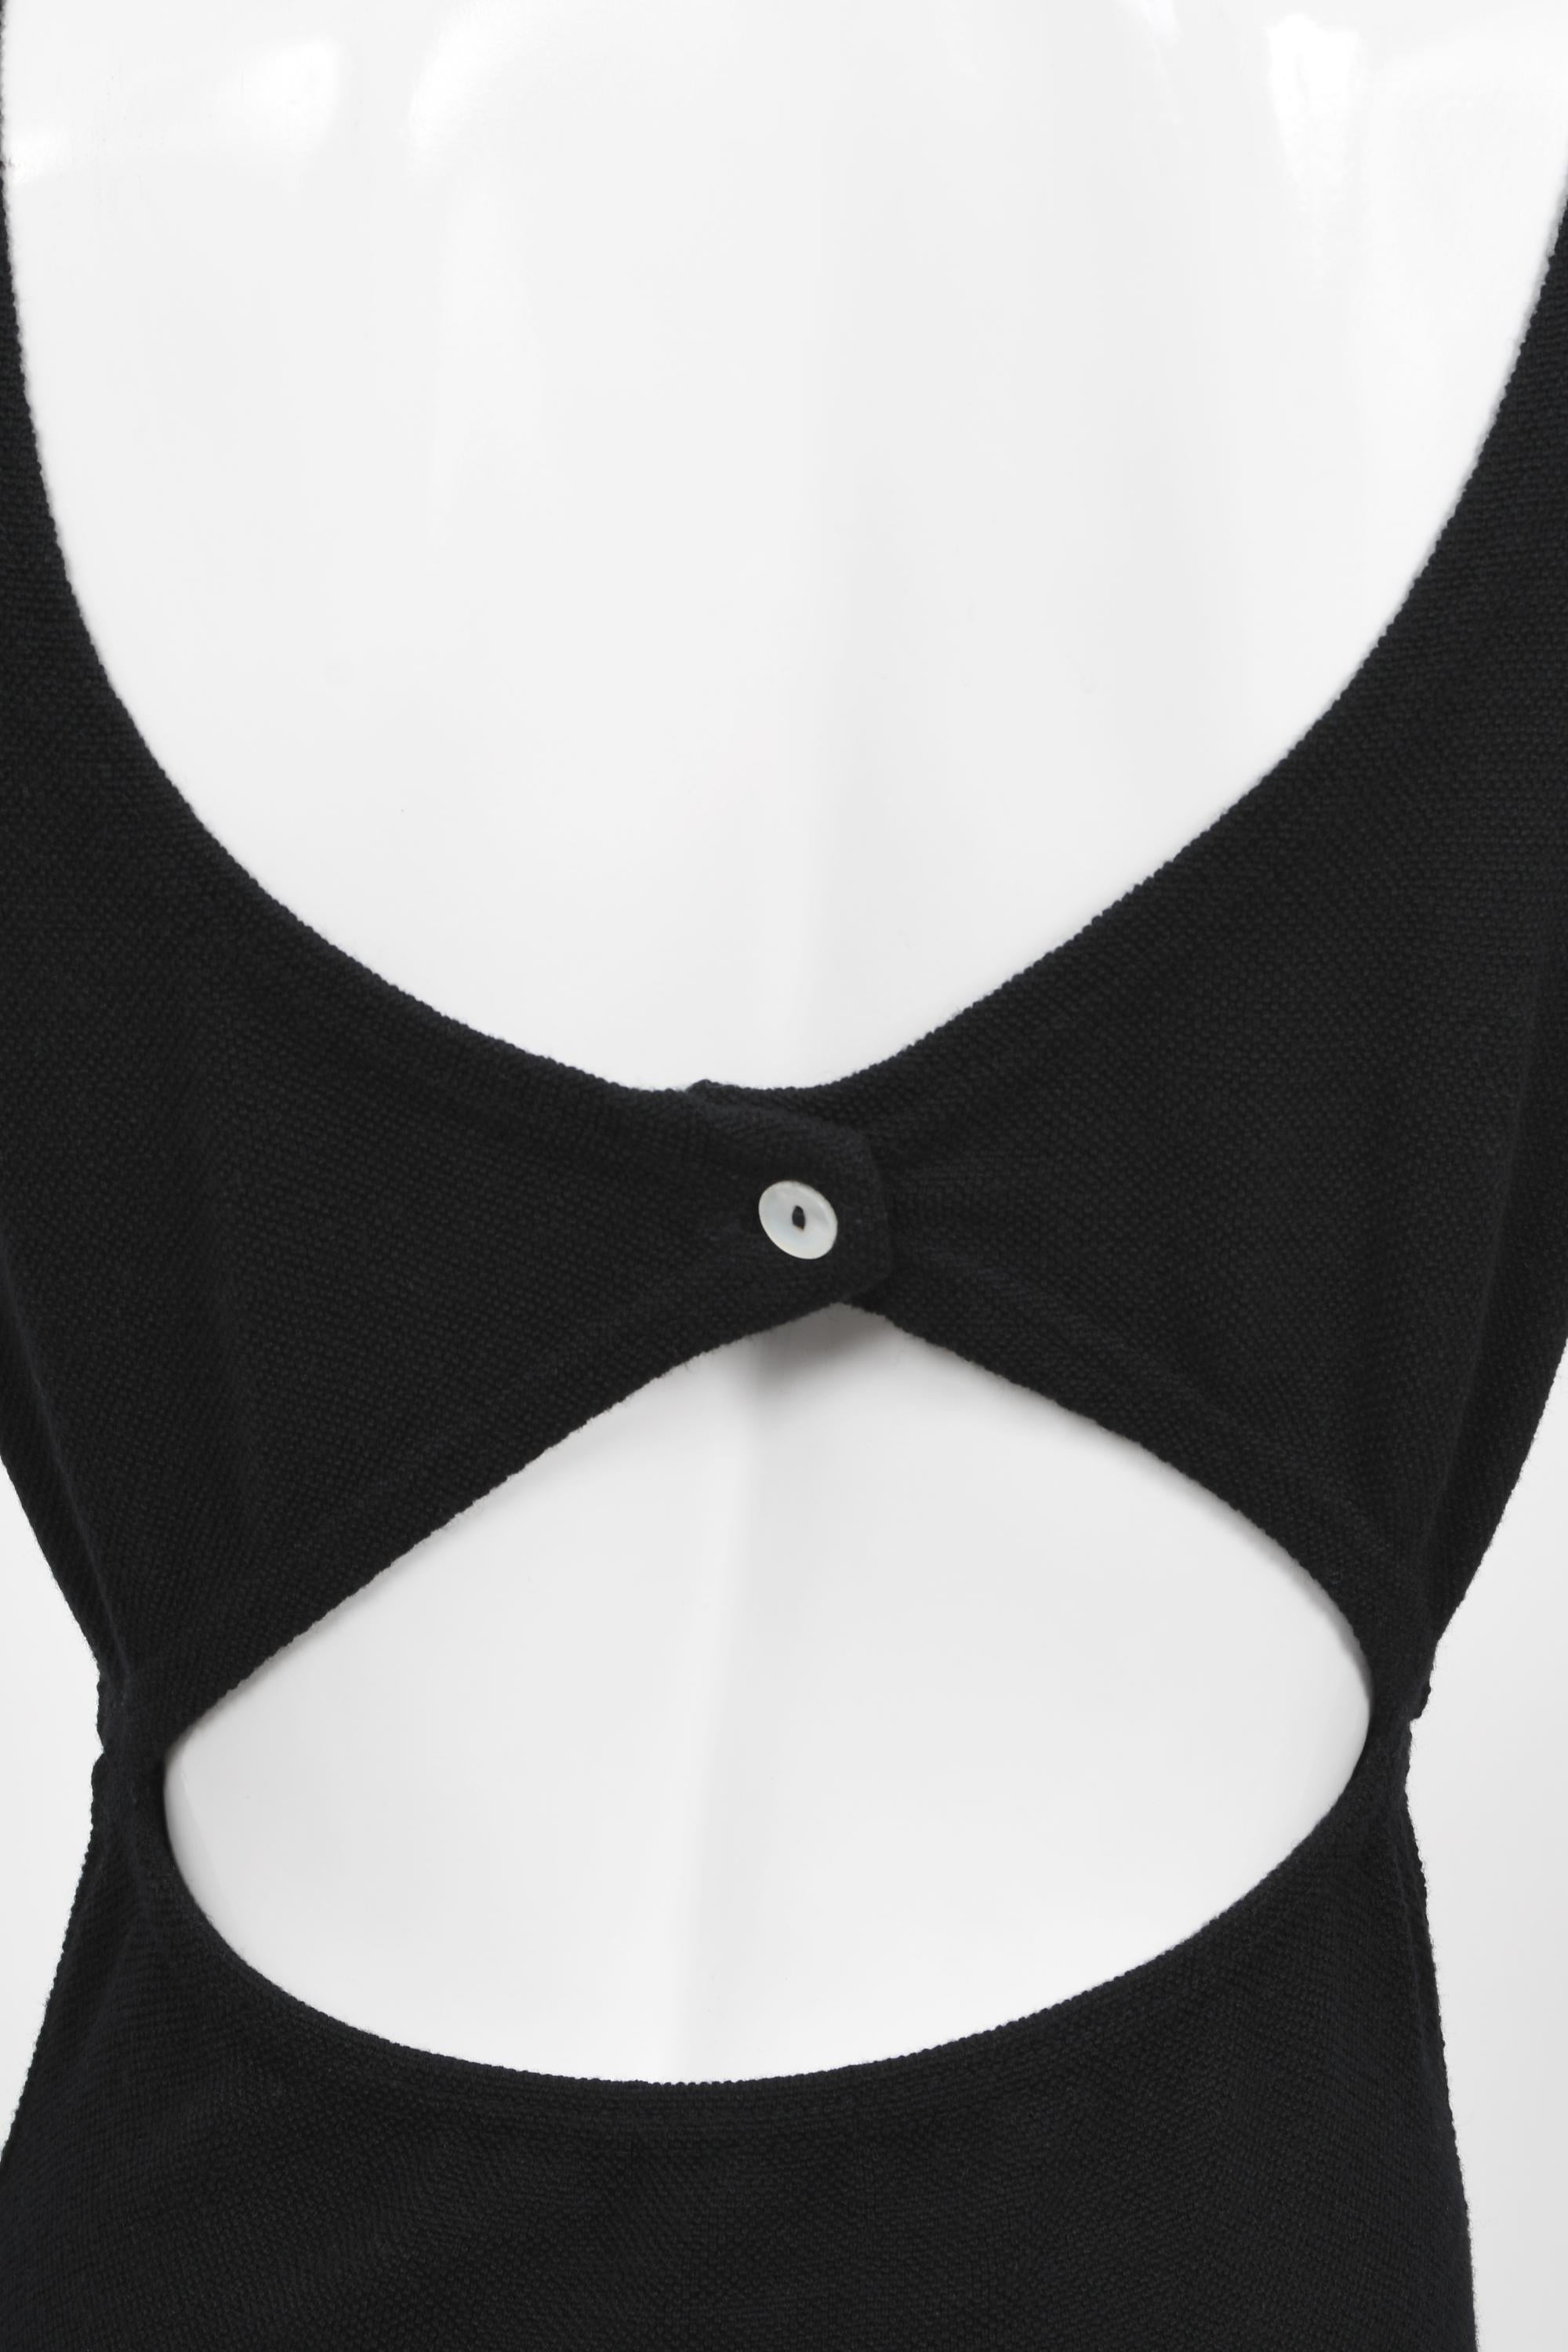 Vintage 1968 Rudi Gernreich Museum-Held Black Wool Jersey Cut Out Mod Swimsuit  For Sale 6